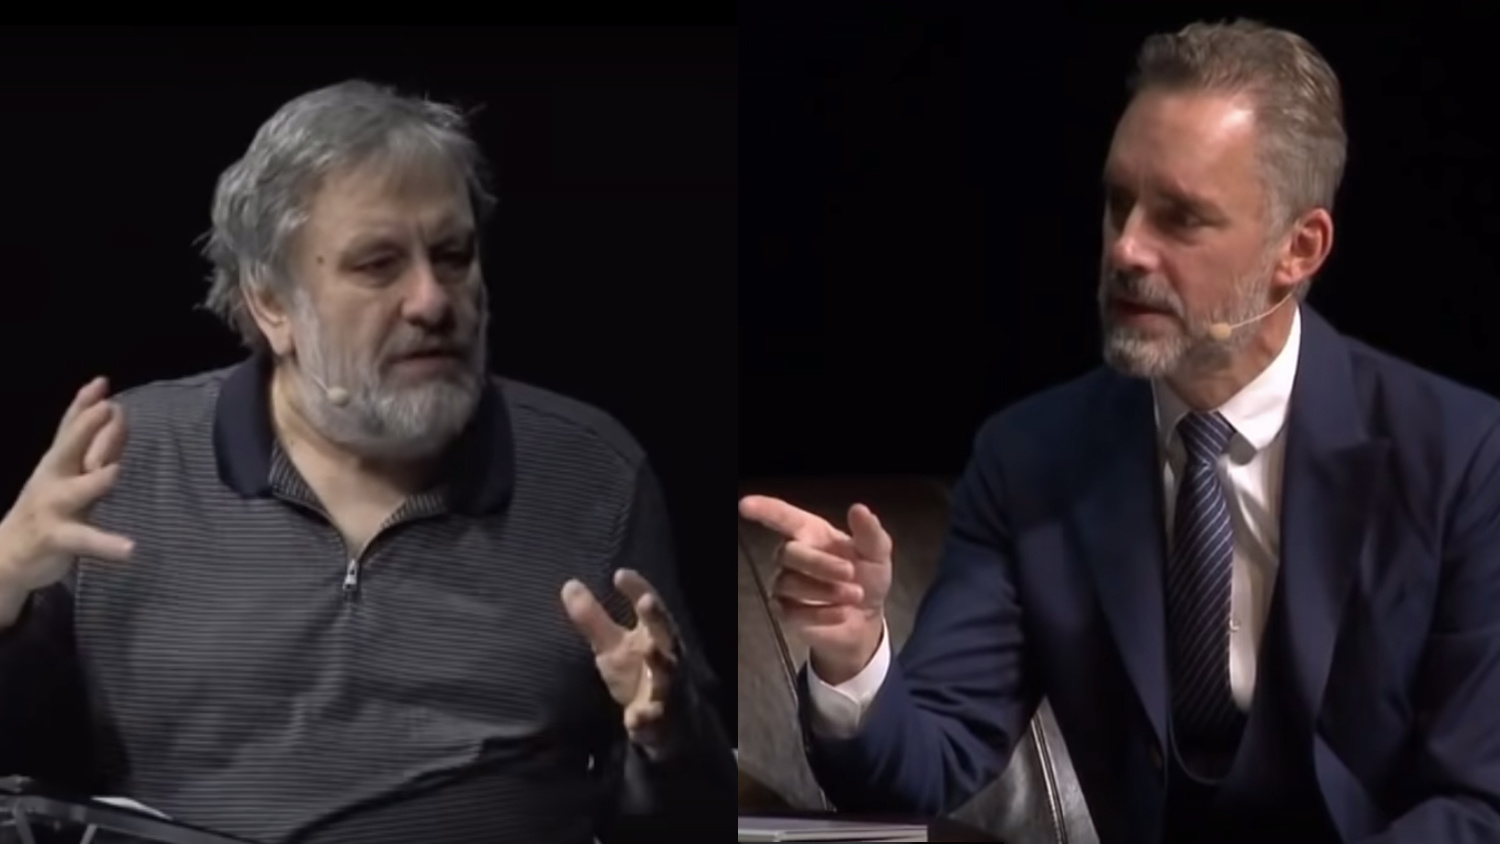 Intakt pille ensom Highlights of the "debate of the century": Jordan Peterson and Slavoj Zizek  - Big Think